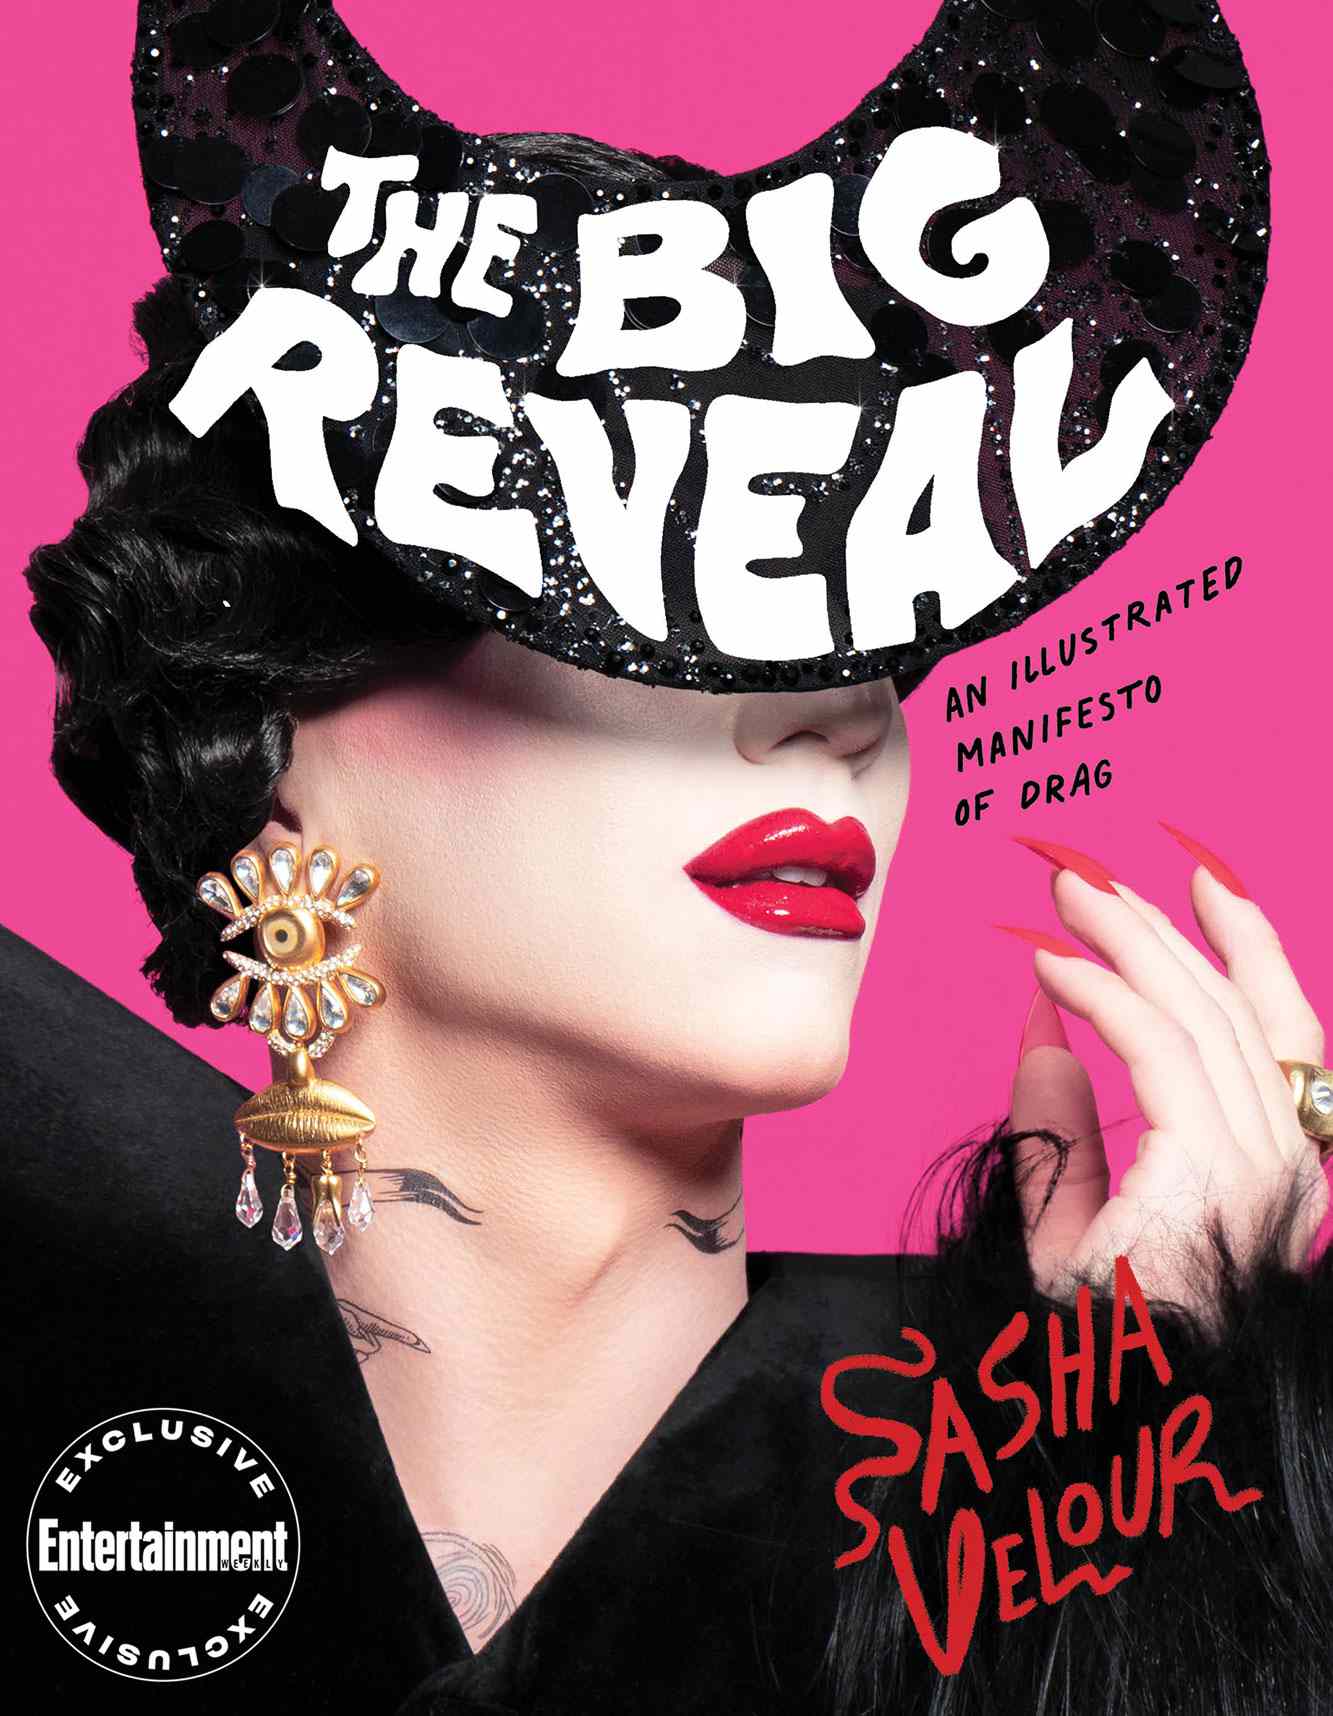 The Big Reveal by Sasha Velour